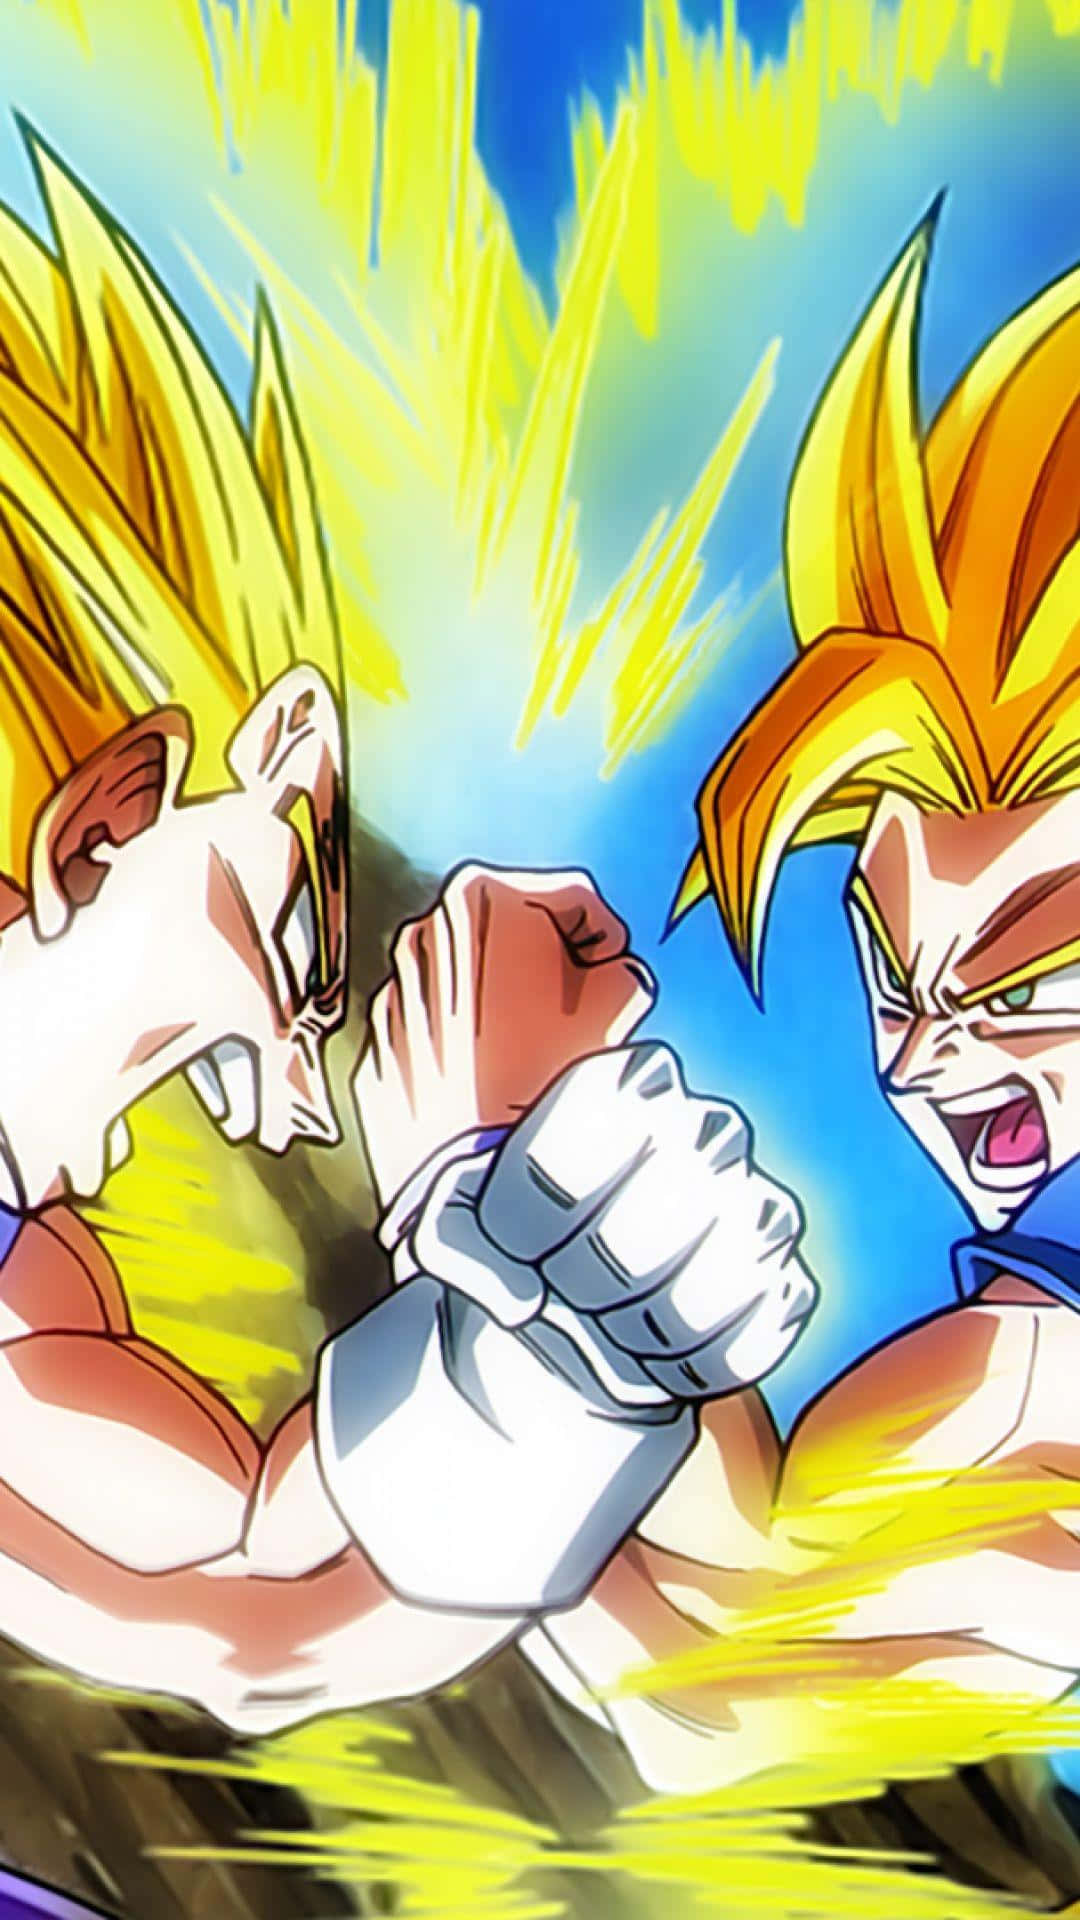 Goku and Vegeta clash in a battle of Saiyan pride. Wallpaper